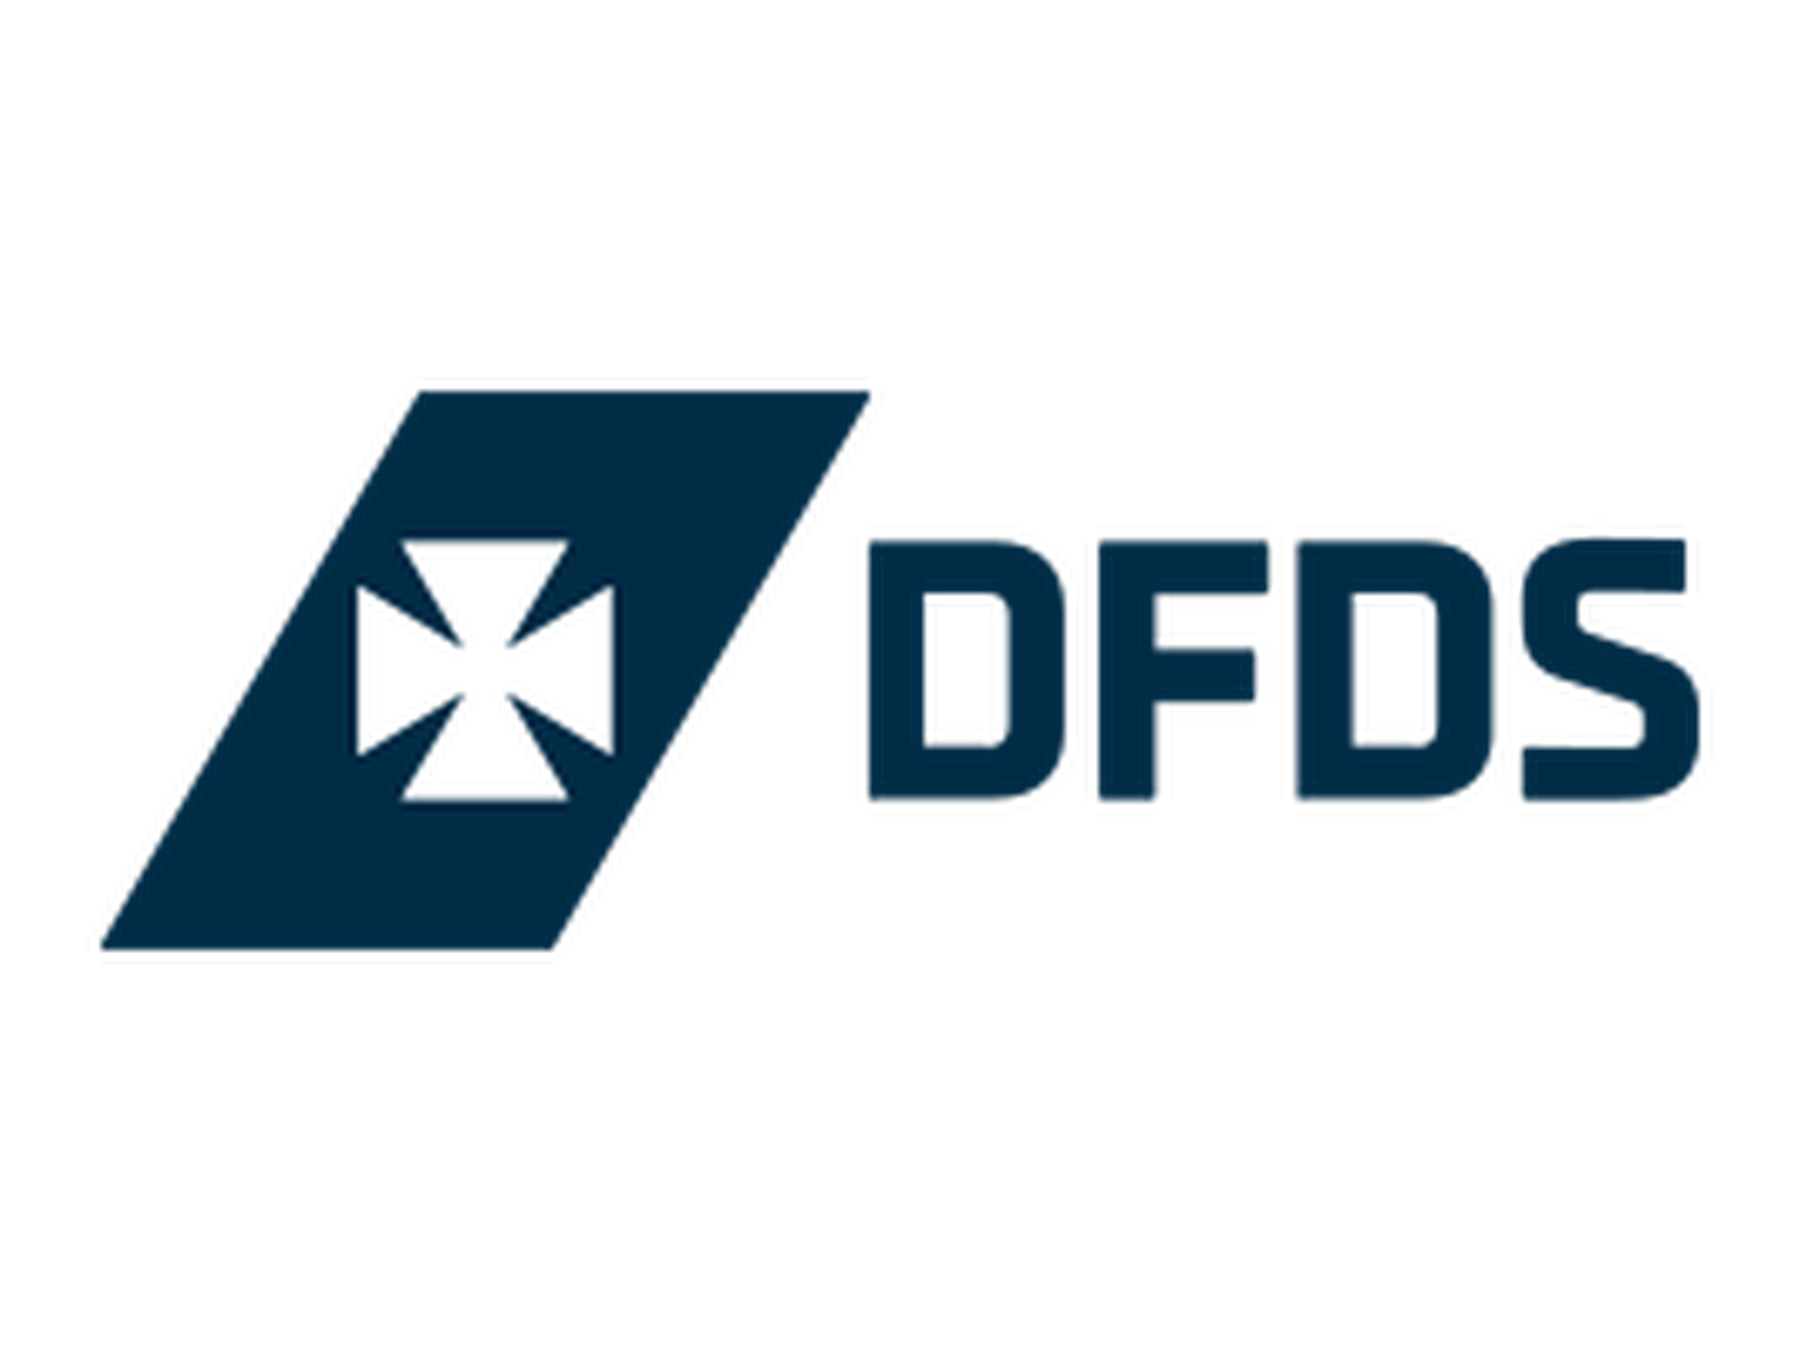 DFDS kampanjekode